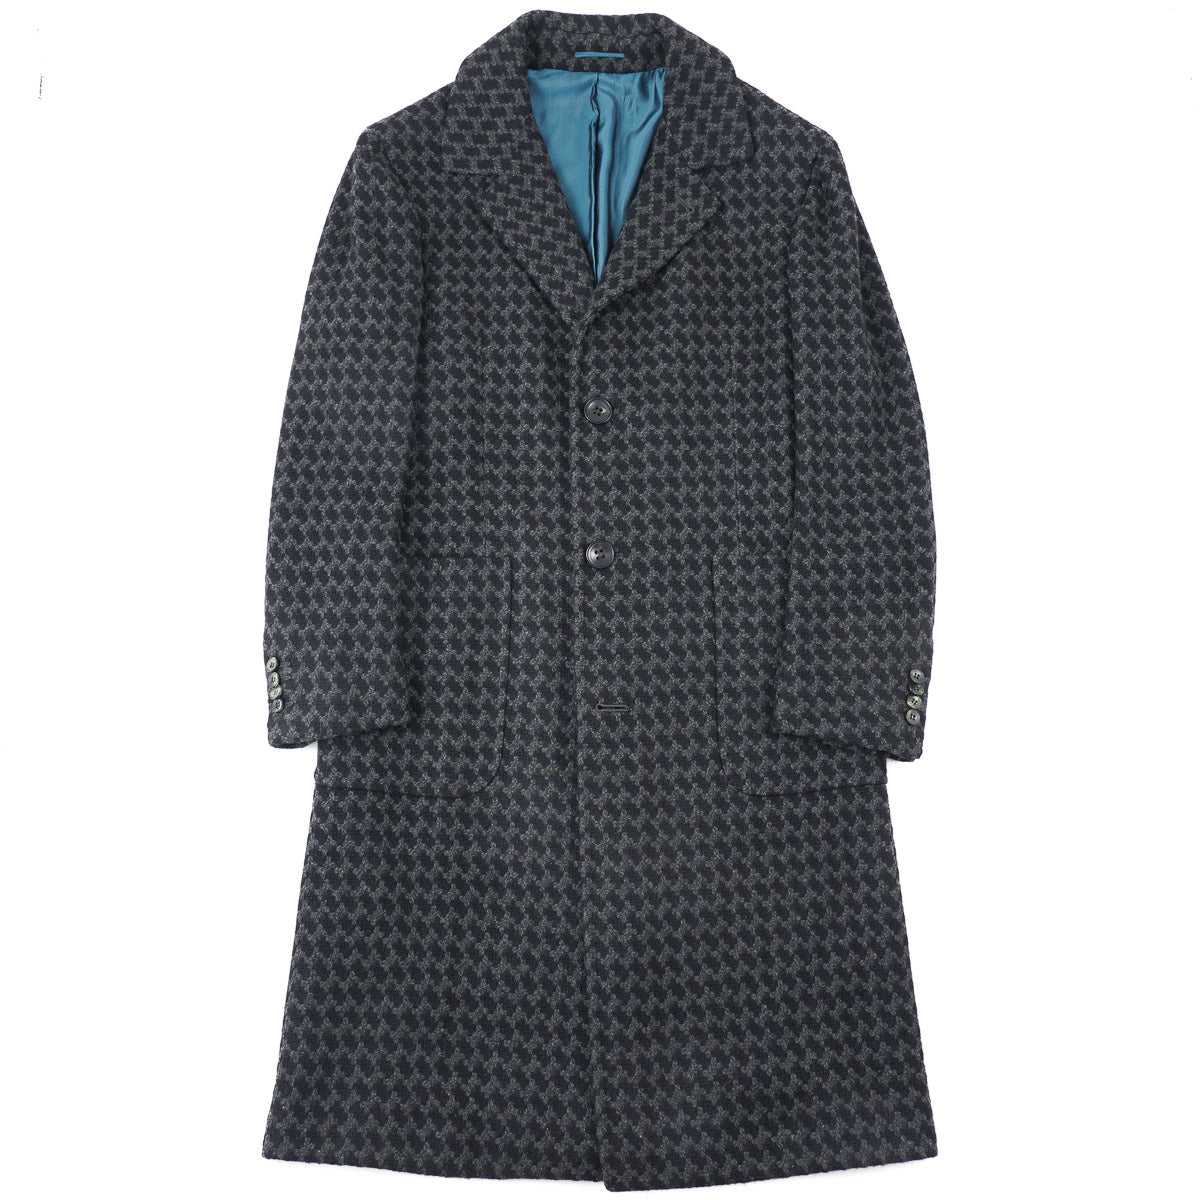 Kiton Houndstooth Check Cashmere Overcoat - Top Shelf Apparel